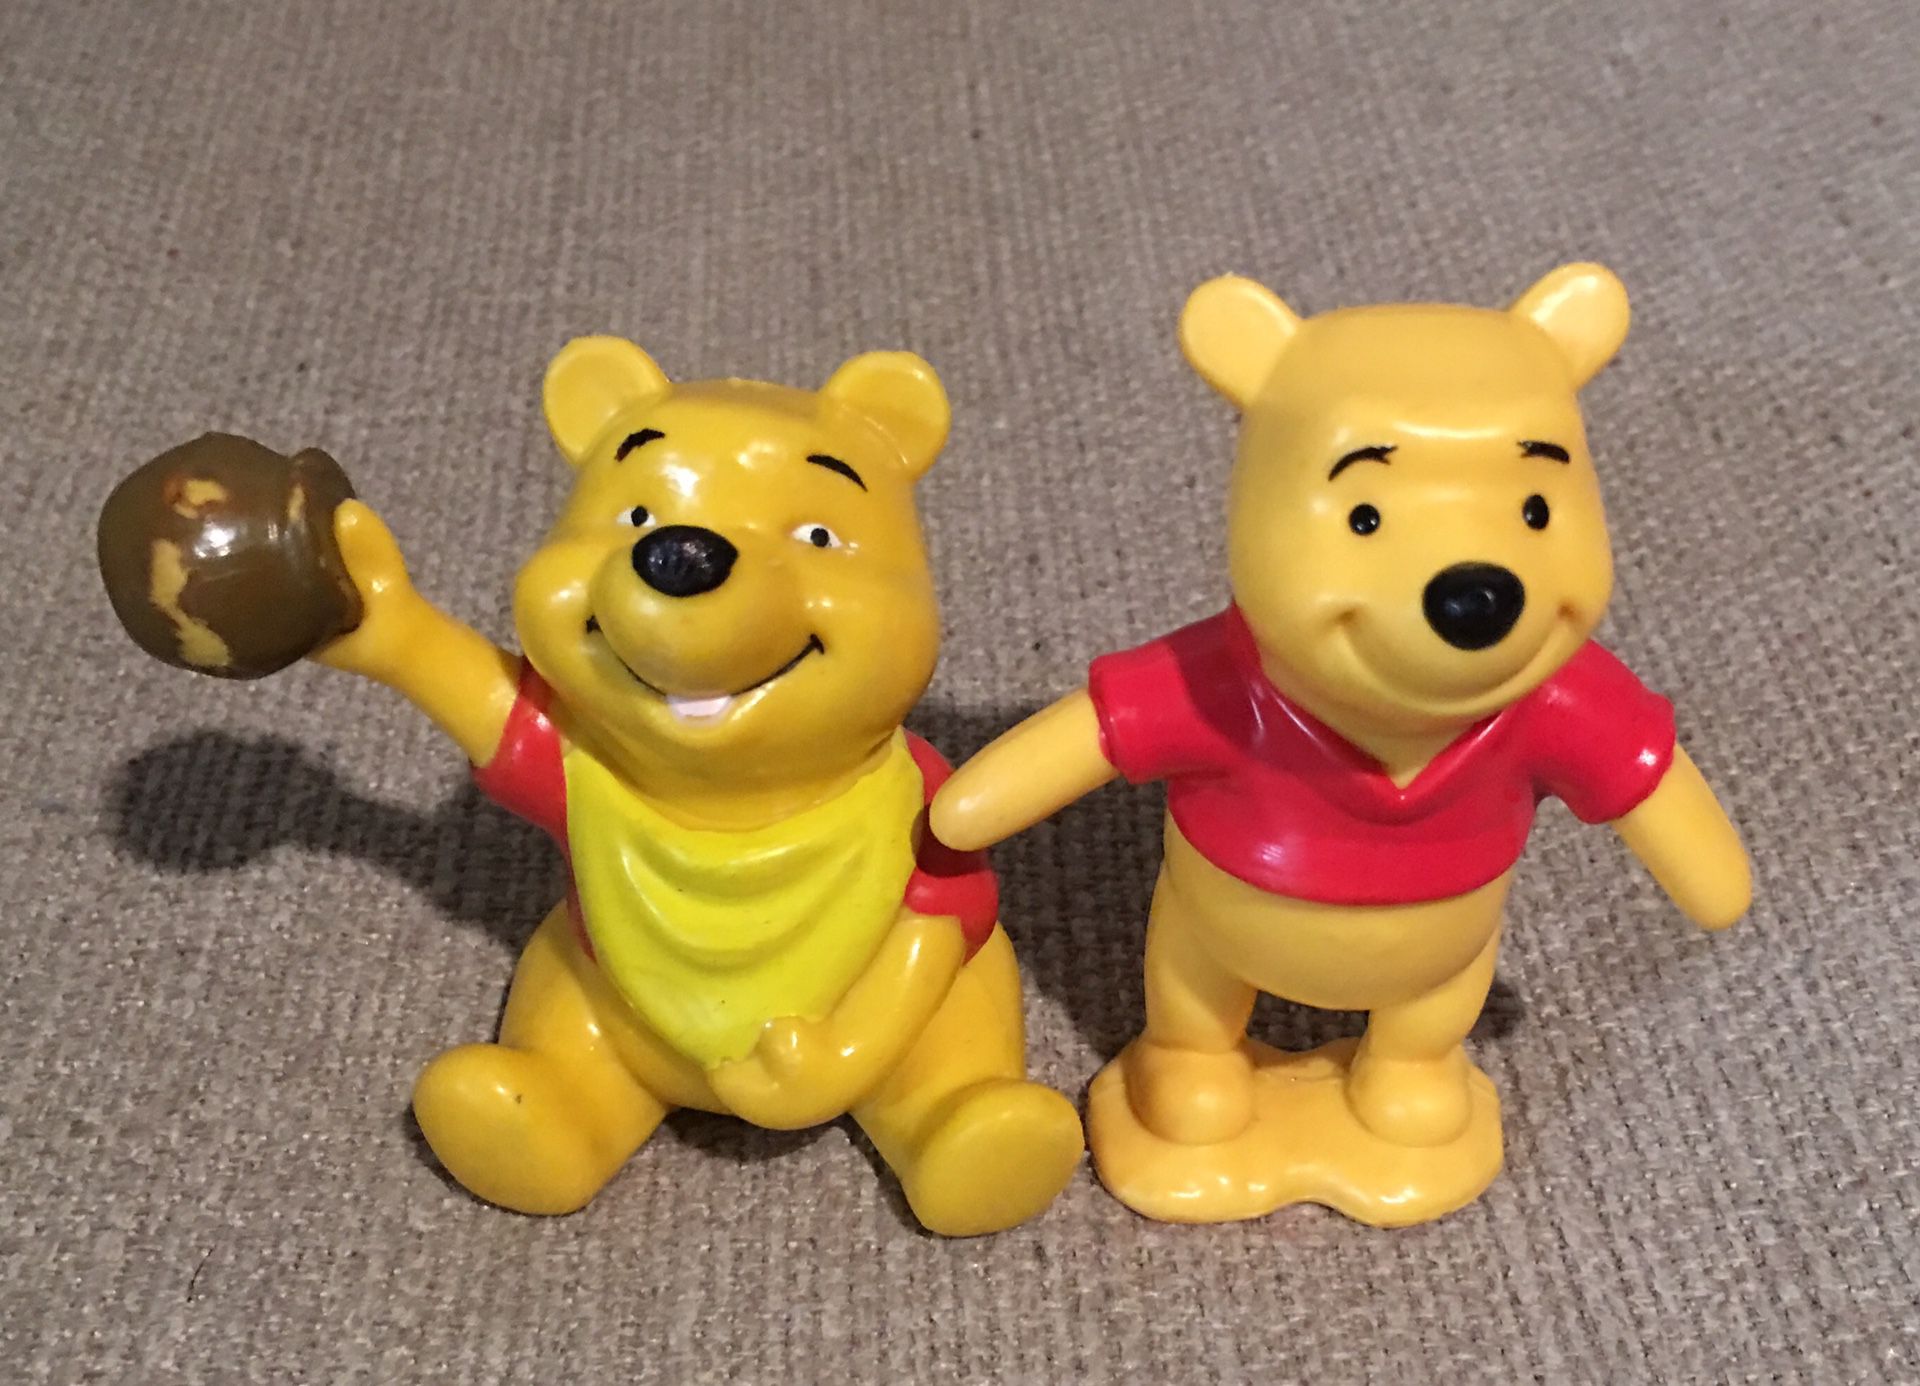 Winnie the Pooh figure toy set